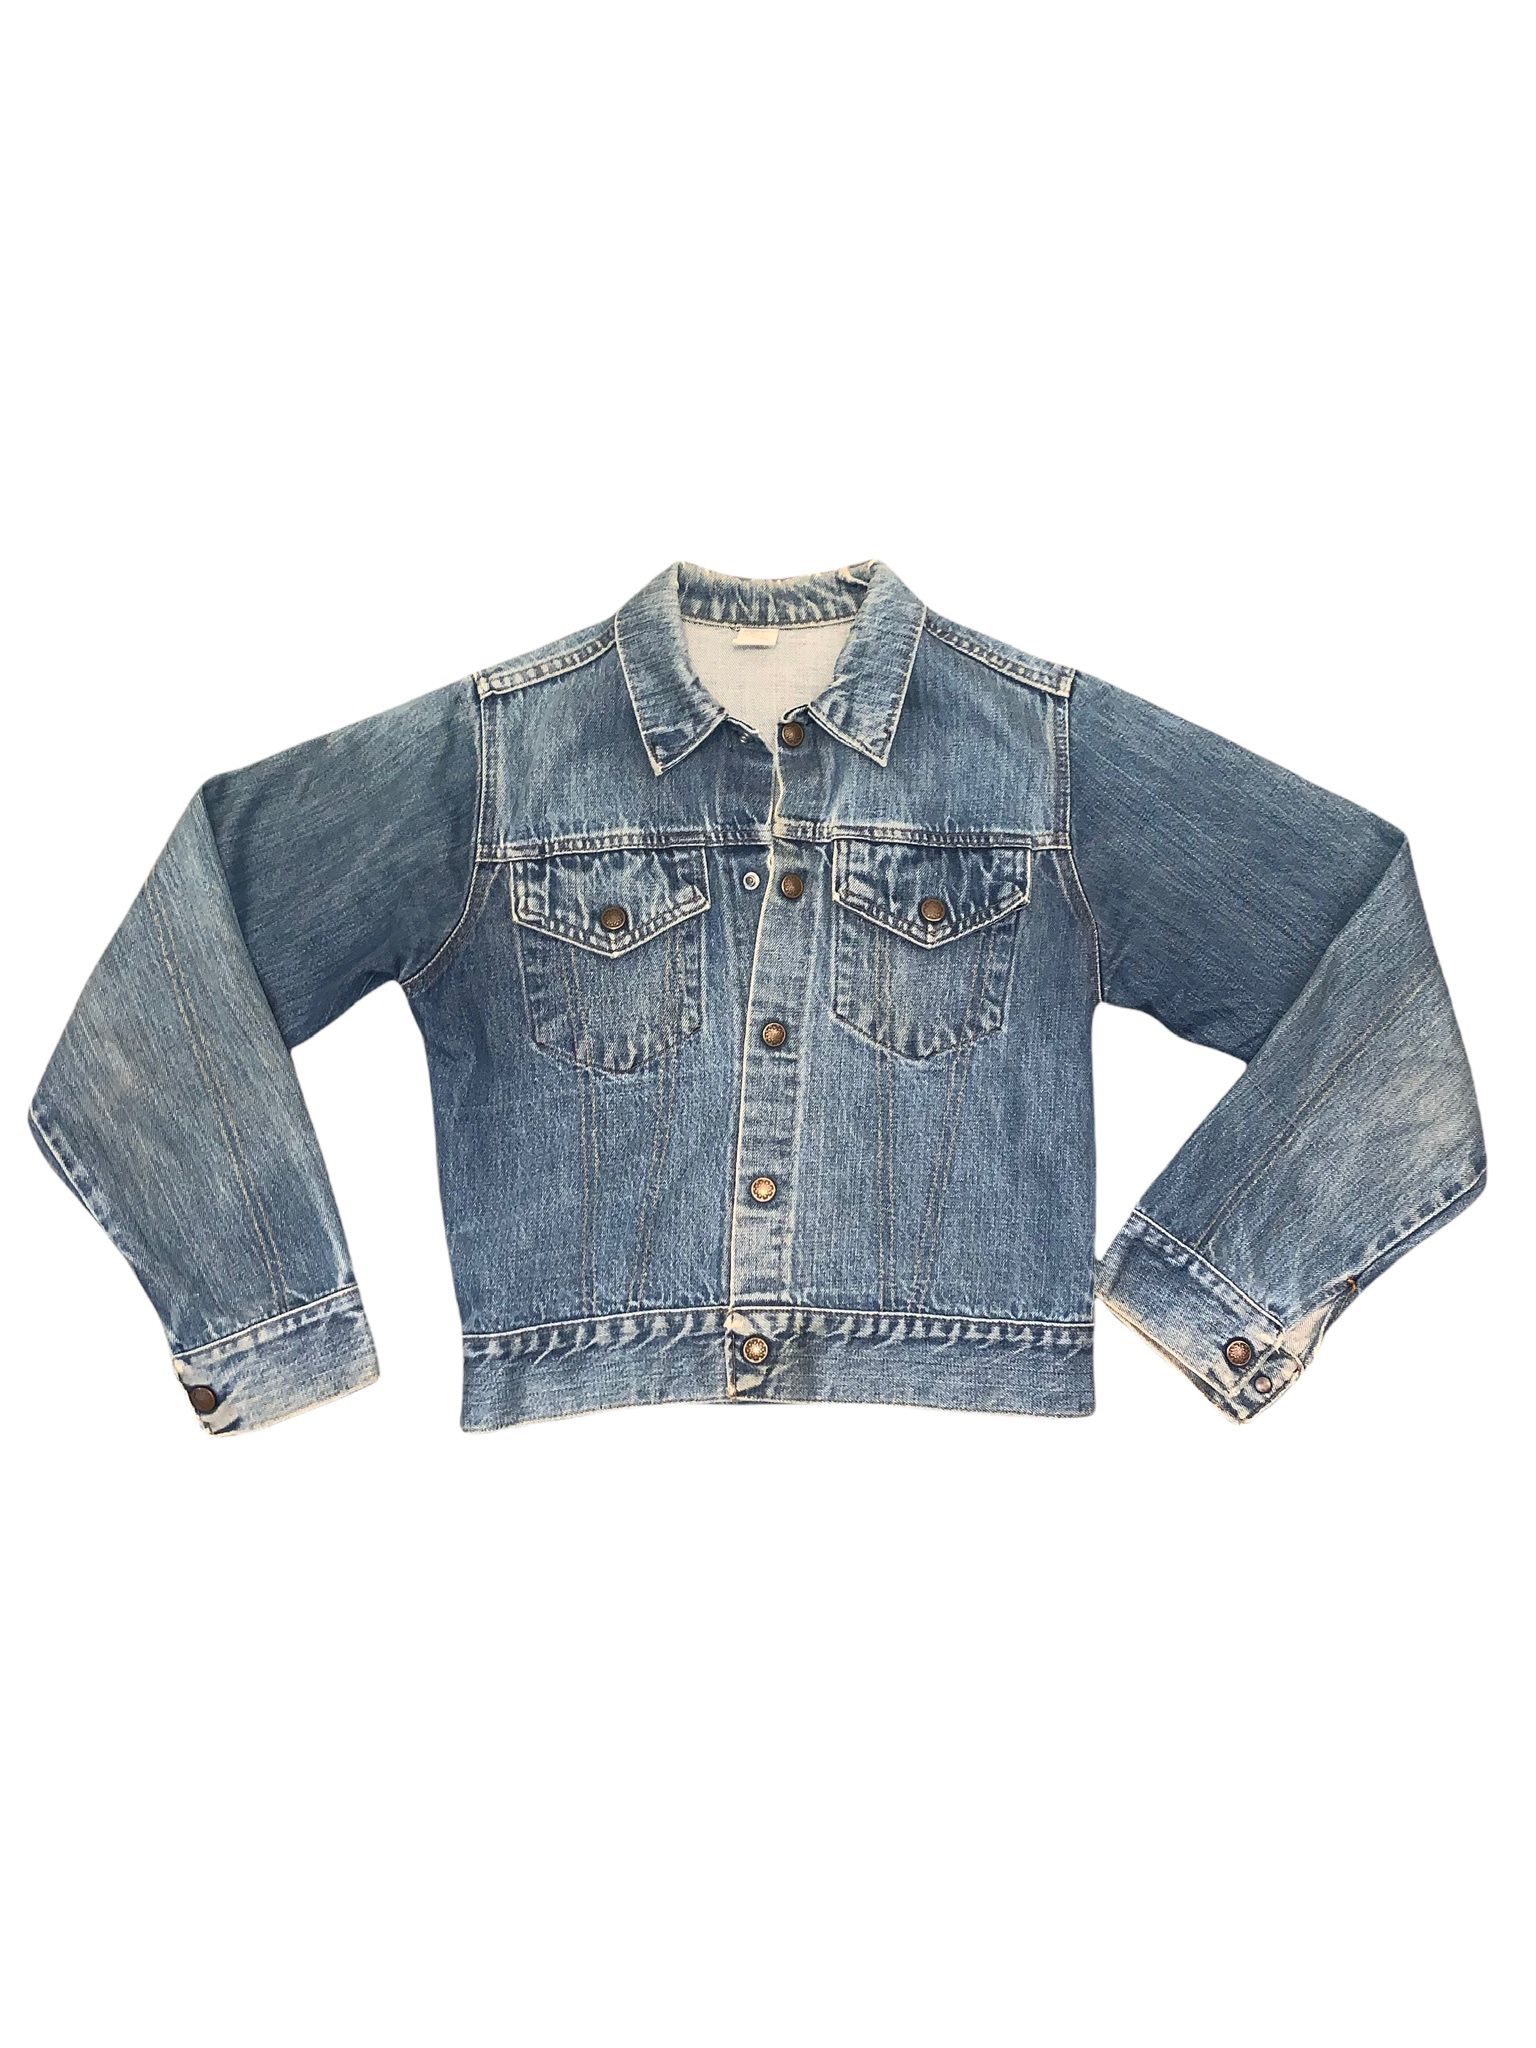 Levis Vintage Jean Jacket, S